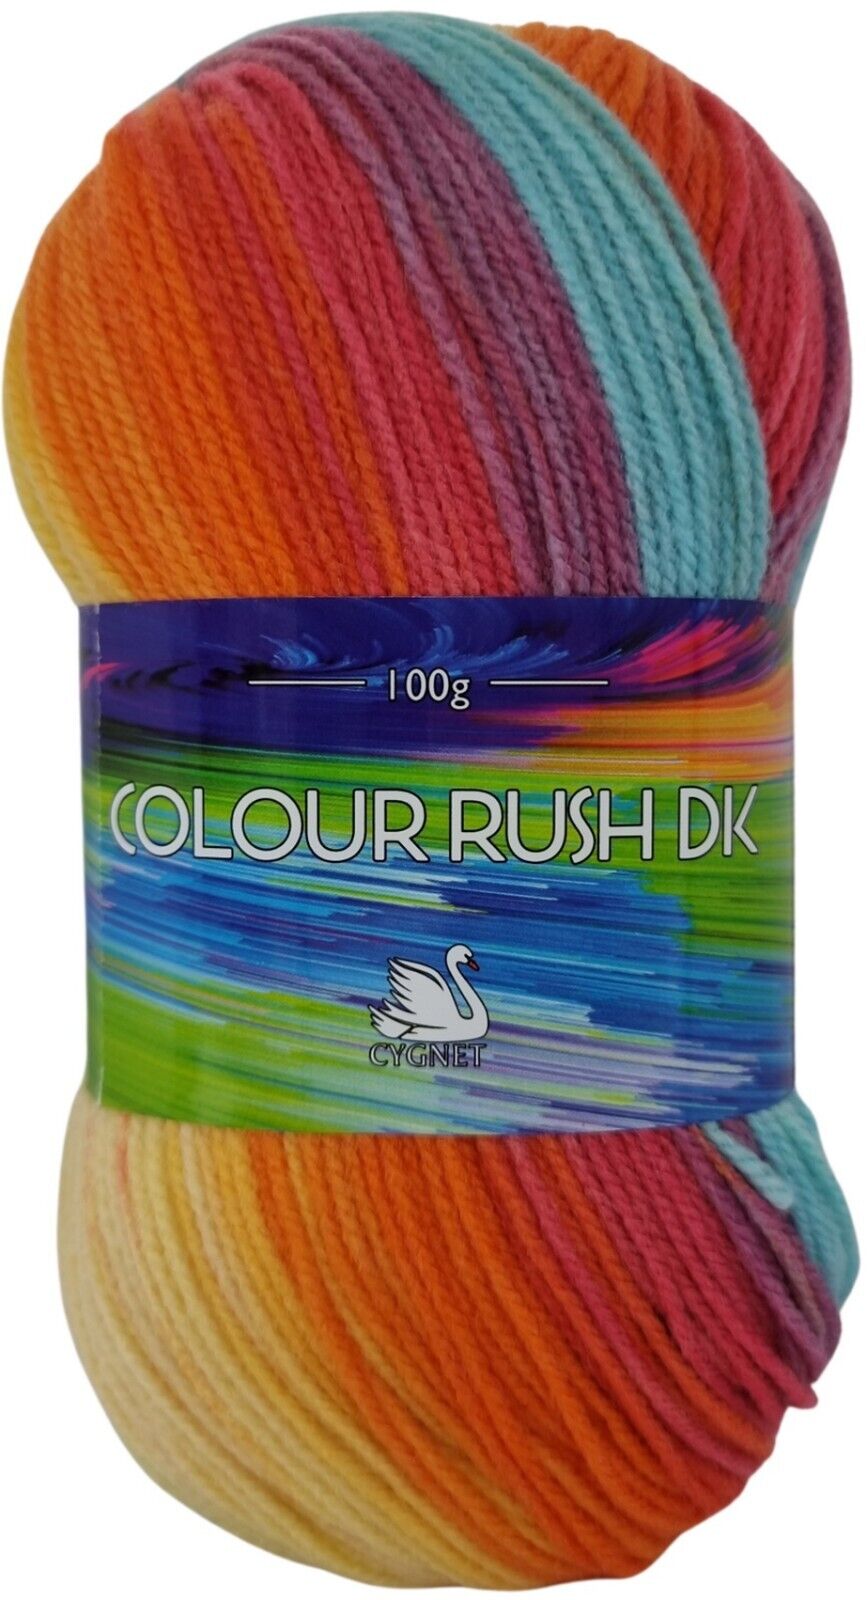 Cygnet COLOUR RUSH DK Knitting Yarn / Wool - 100g Double Knit Ball - Calypso